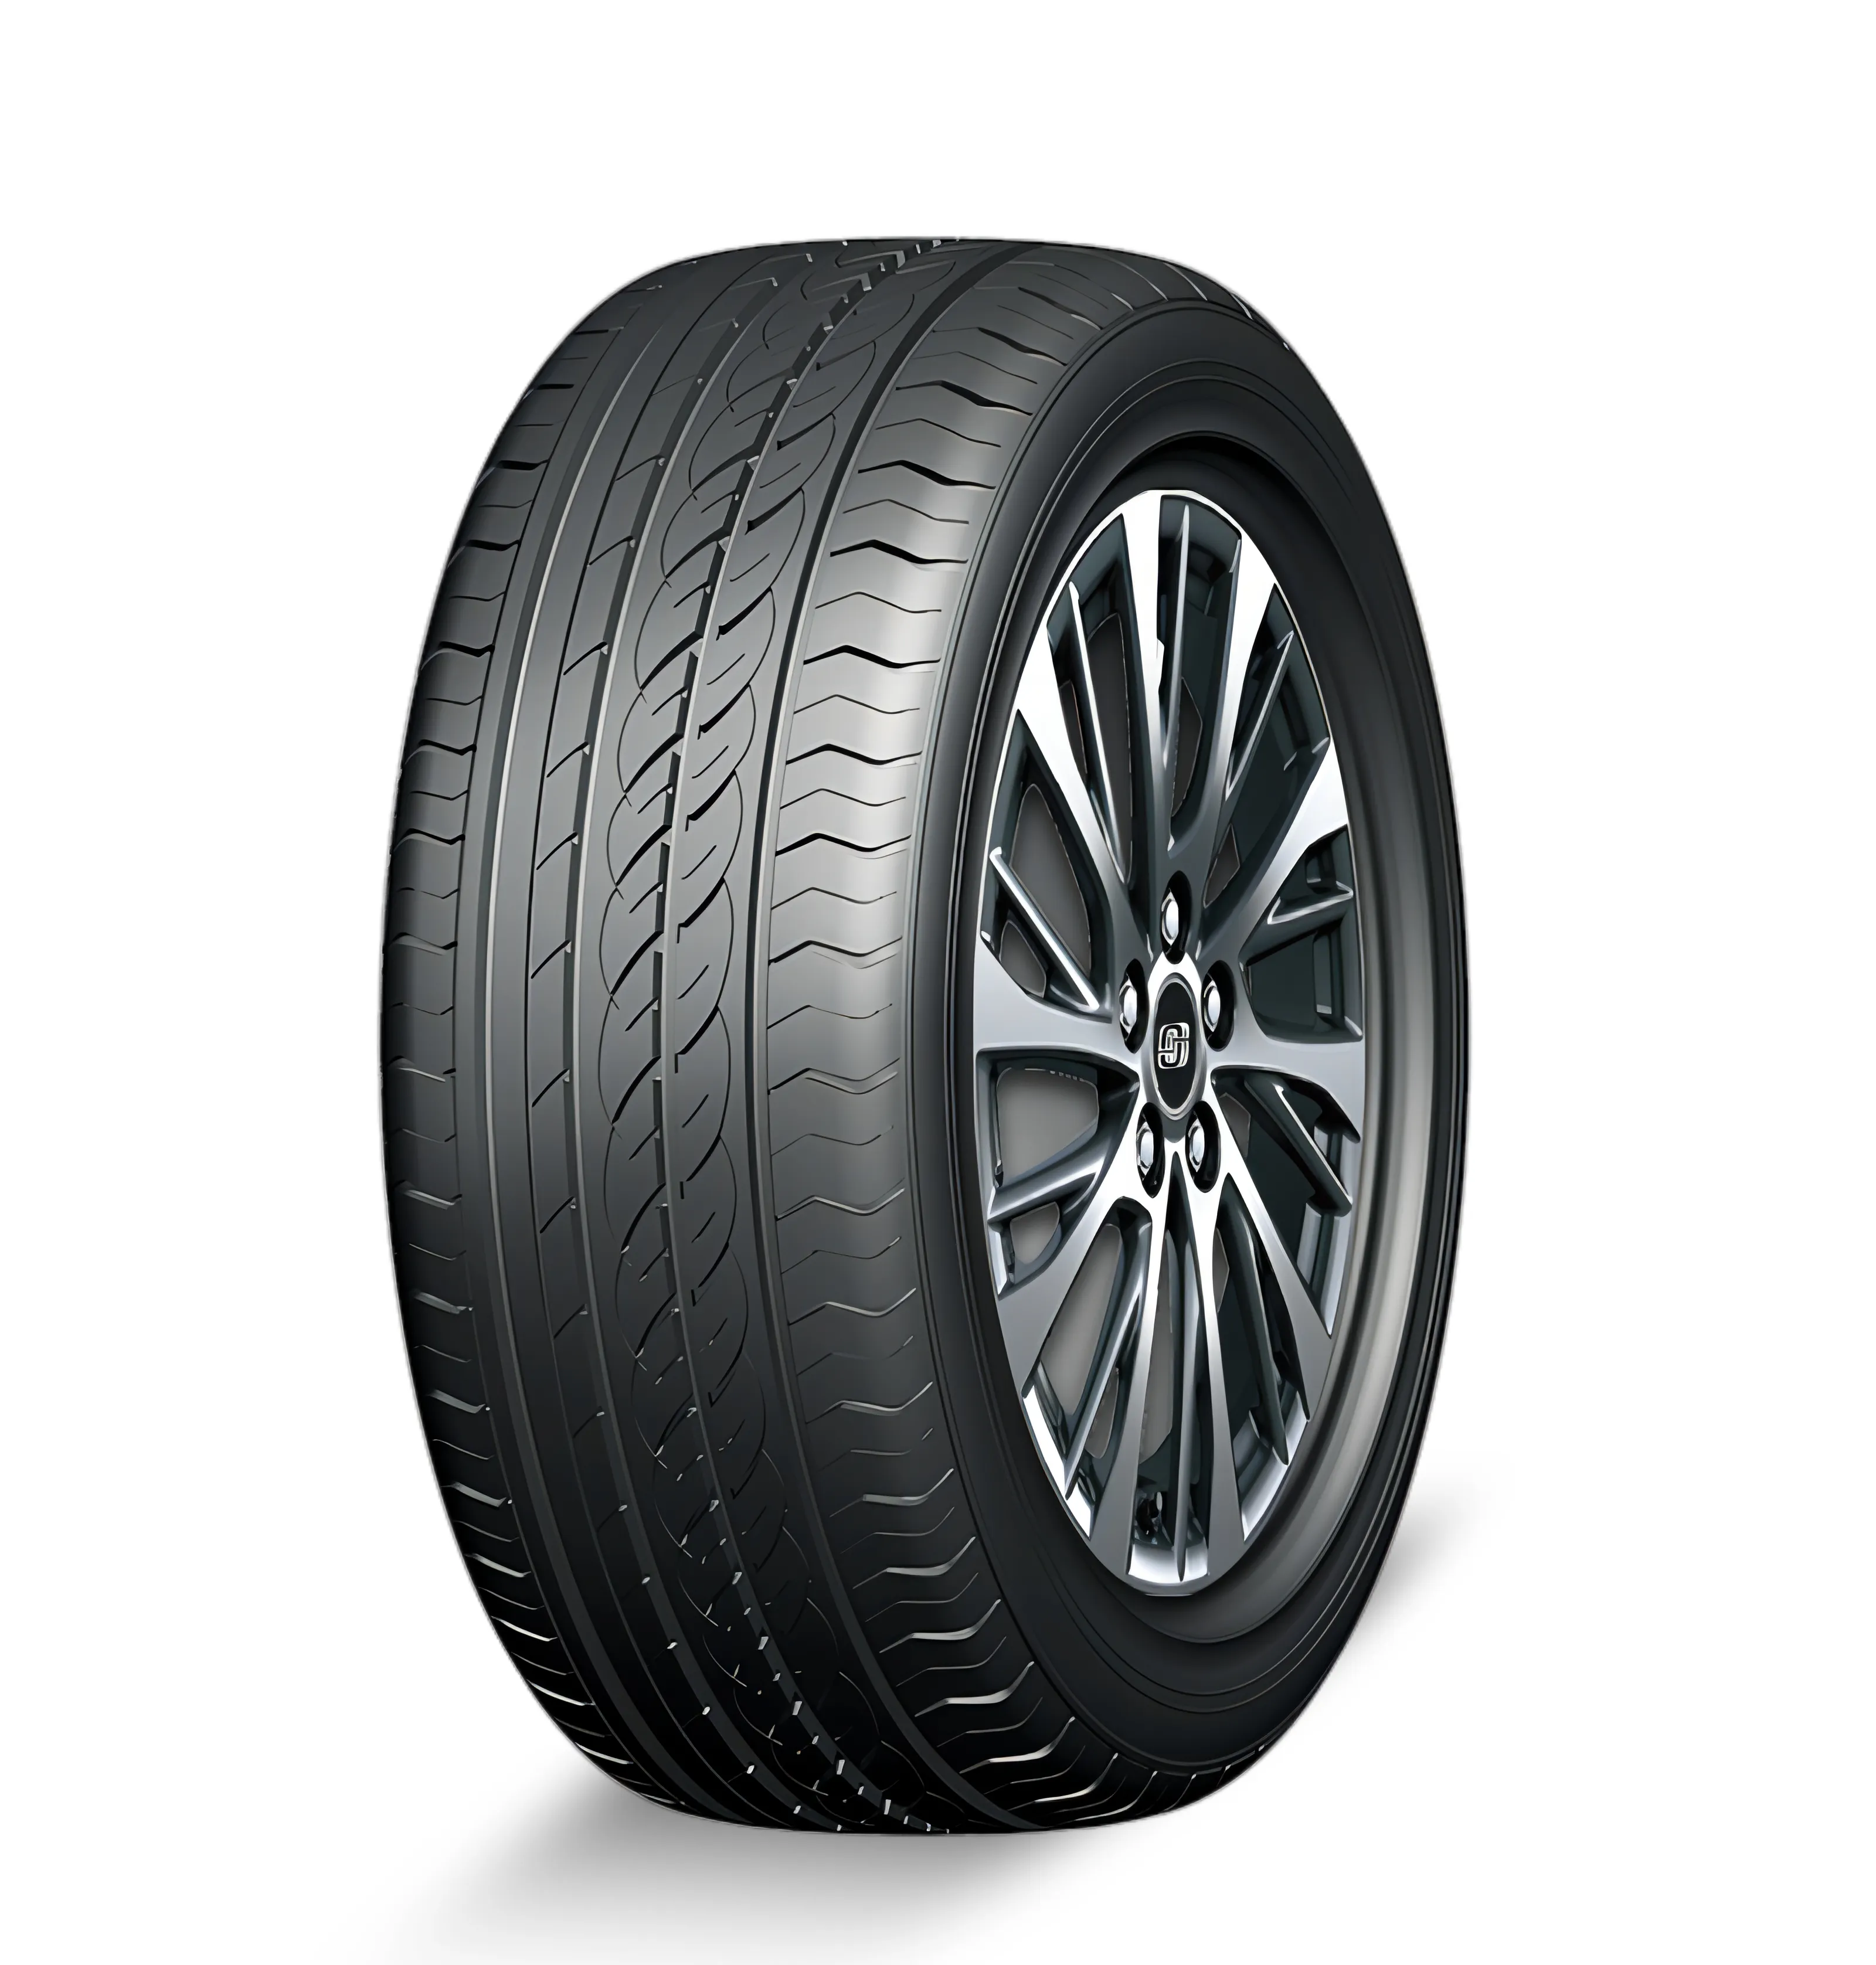 Joyroad uhp tubeless 245/45zr20 pneus 245/45R20 245/45 R20 pneu 245 45 r20 245/45/20